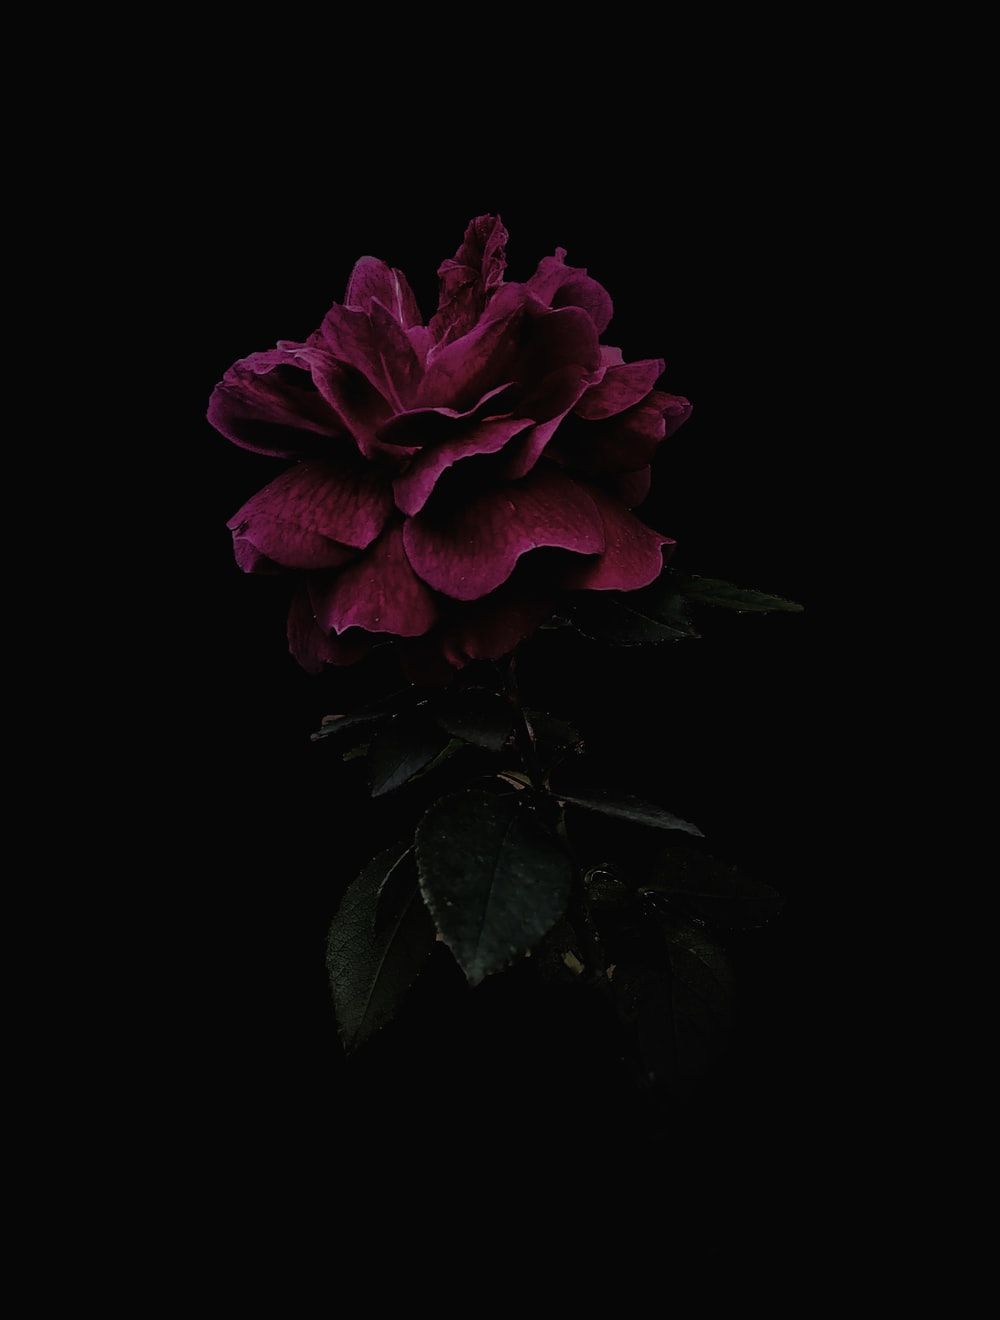 Dark Flower Picture. Download Free Image